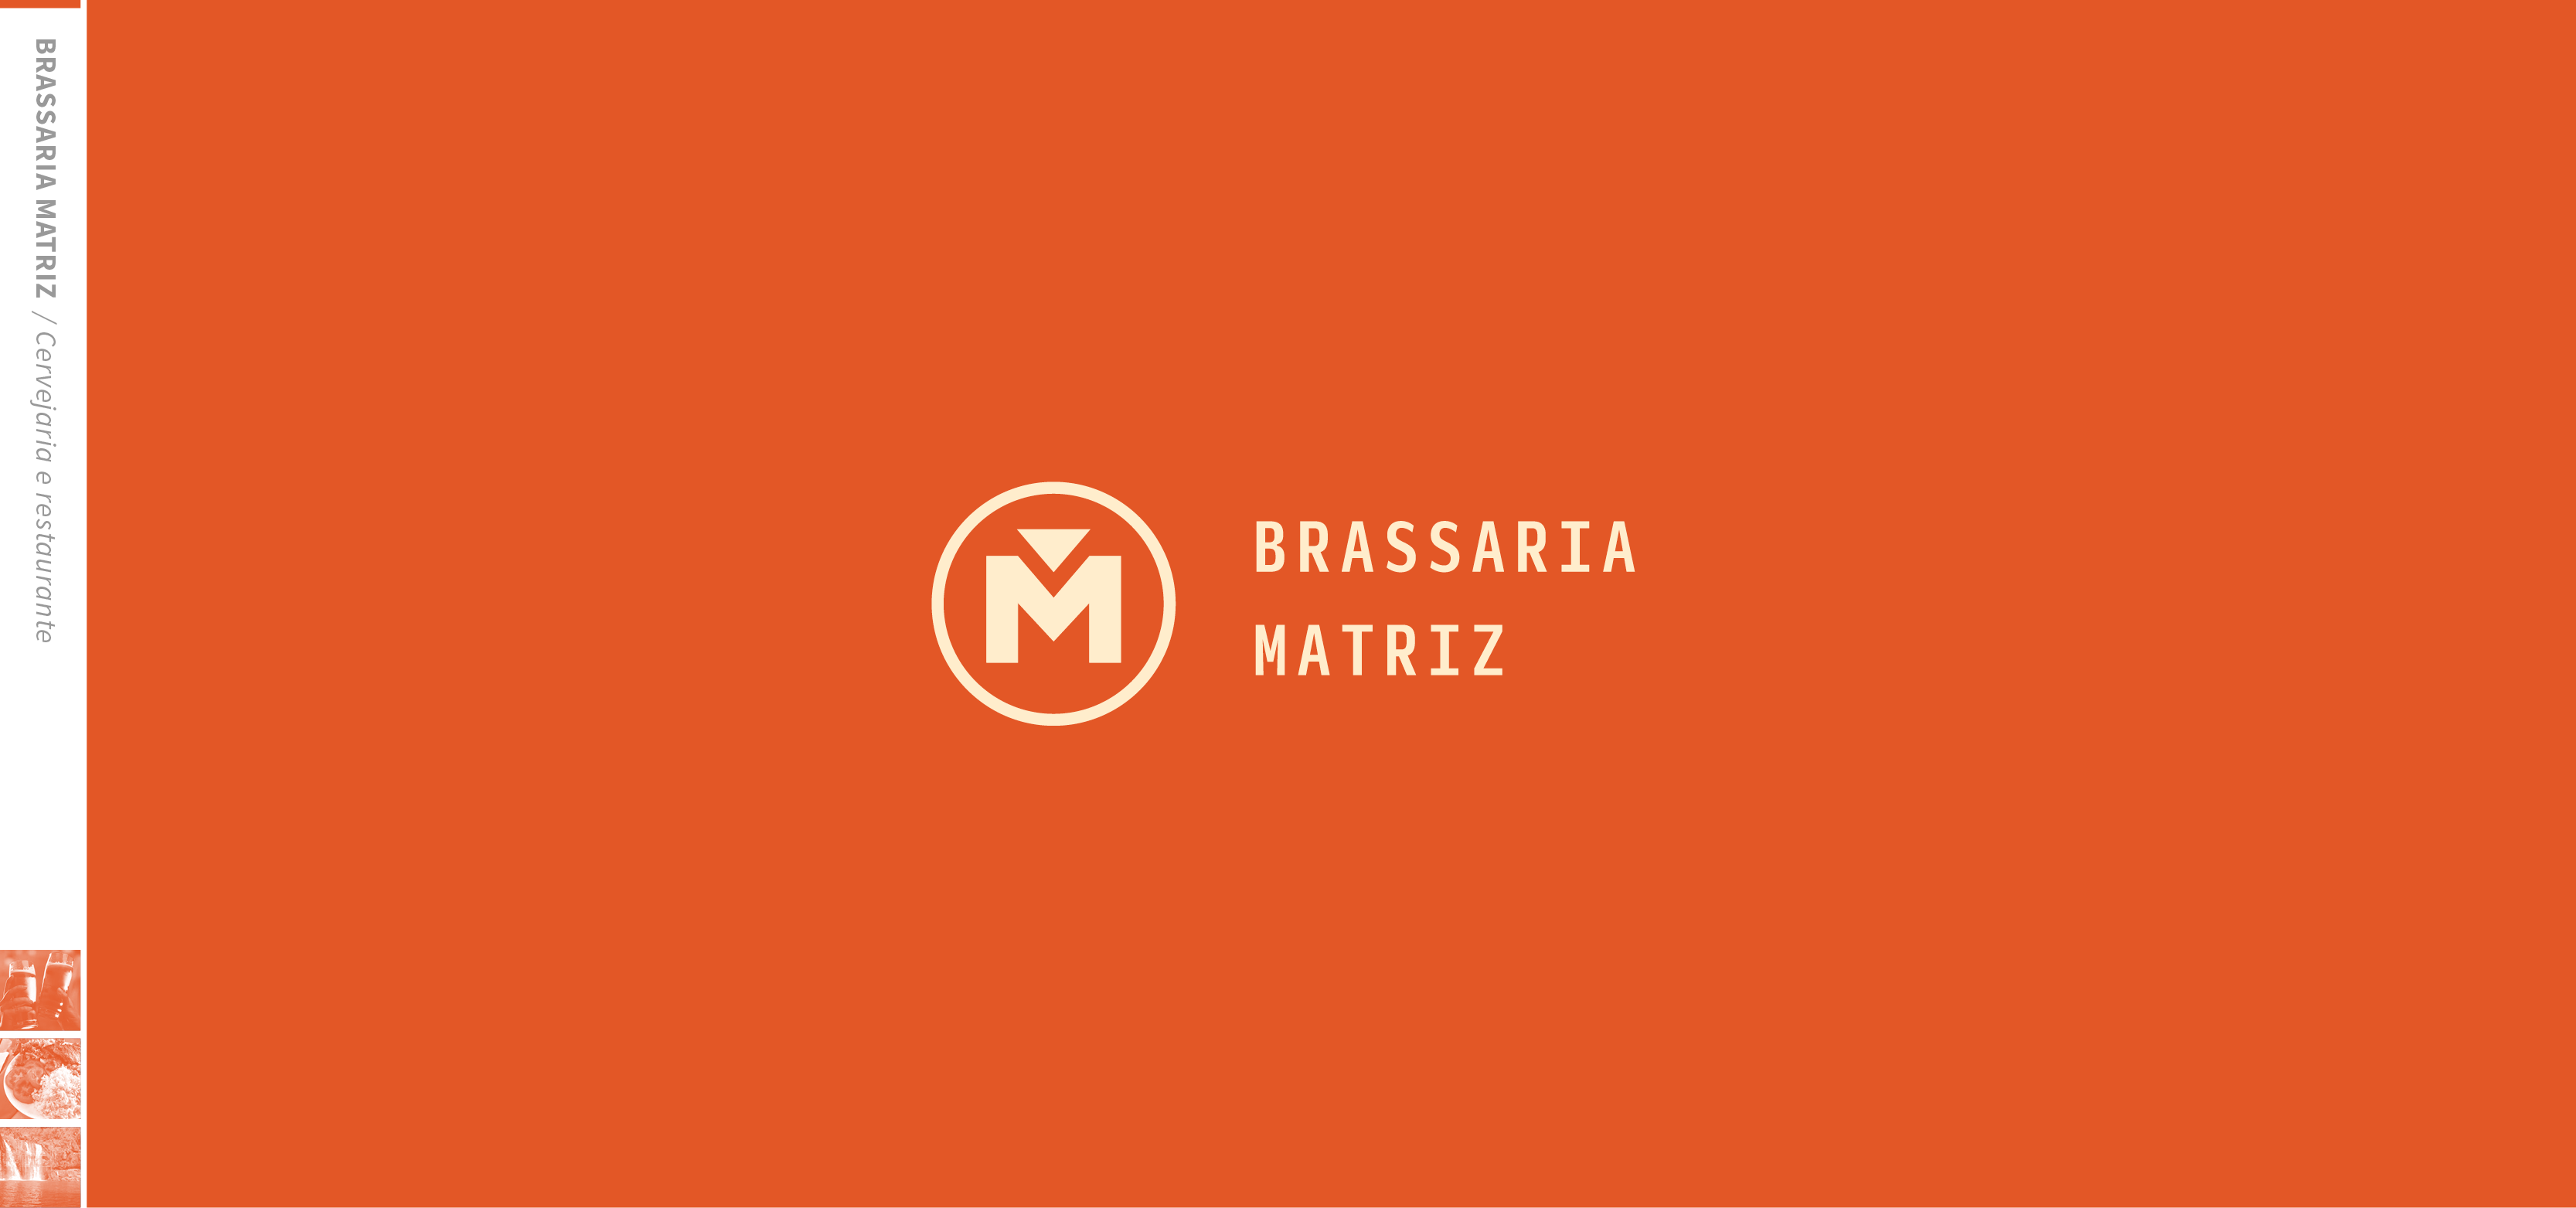 Logos_Brassaria_Matriz